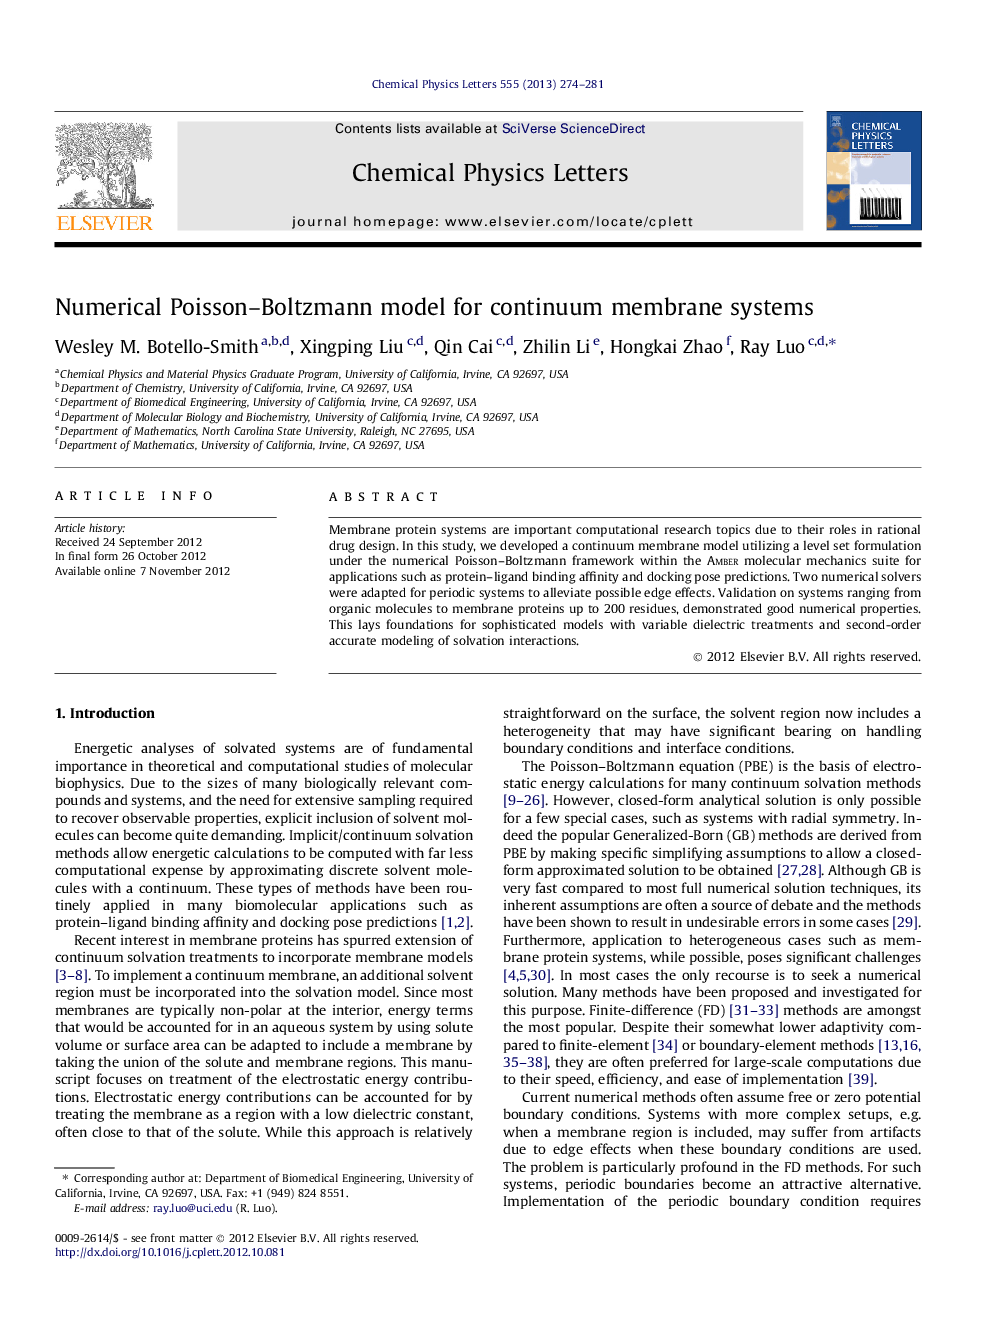 Numerical Poisson-Boltzmann model for continuum membrane systems